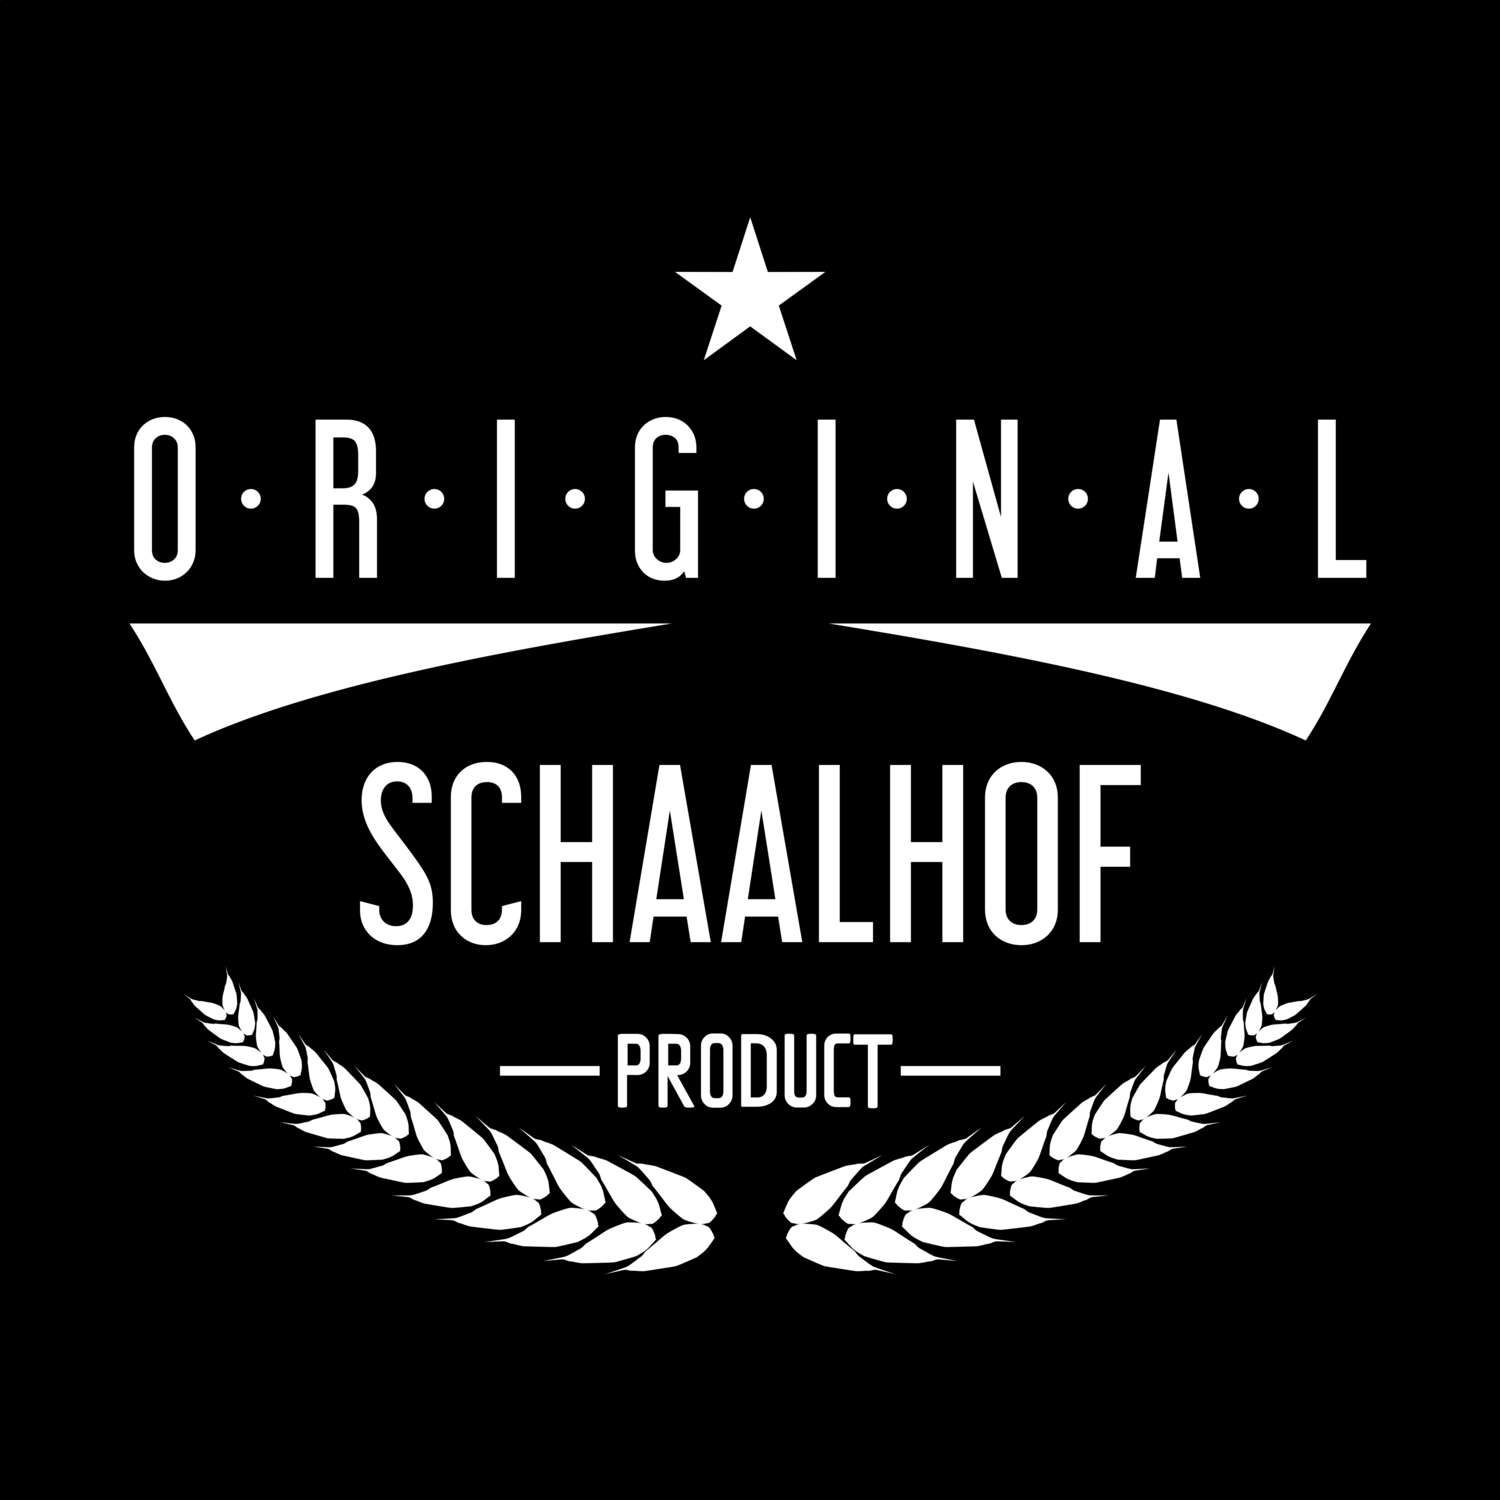 Schaalhof T-Shirt »Original Product«